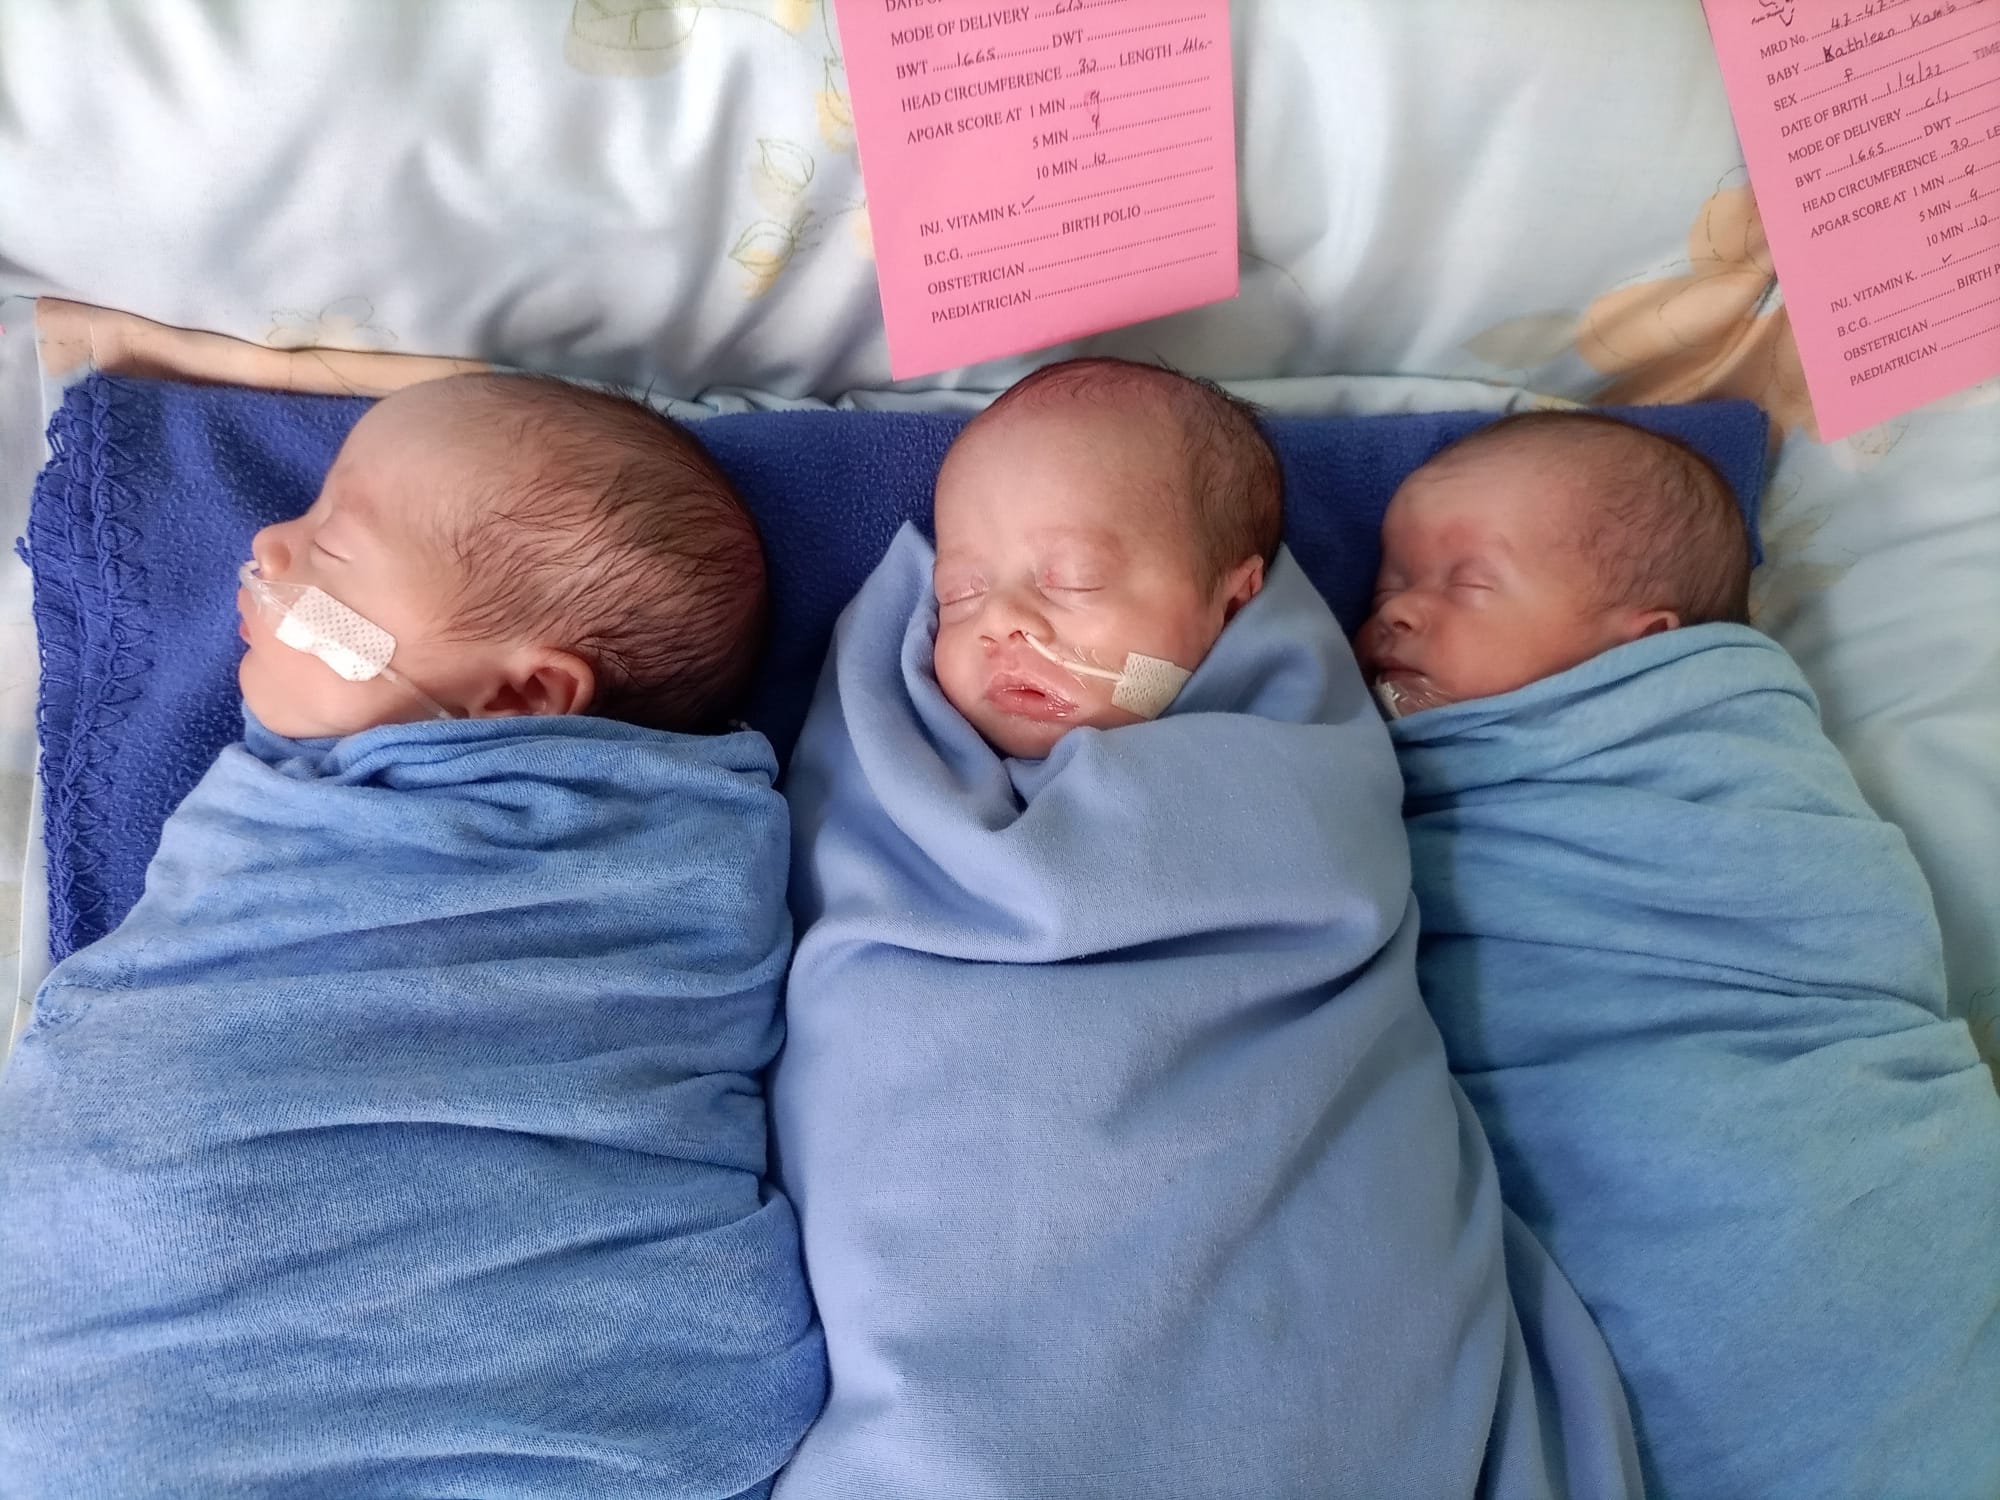 Briella, Camilla and Renesmee are seen in hospital in Nairobi, Kenya.